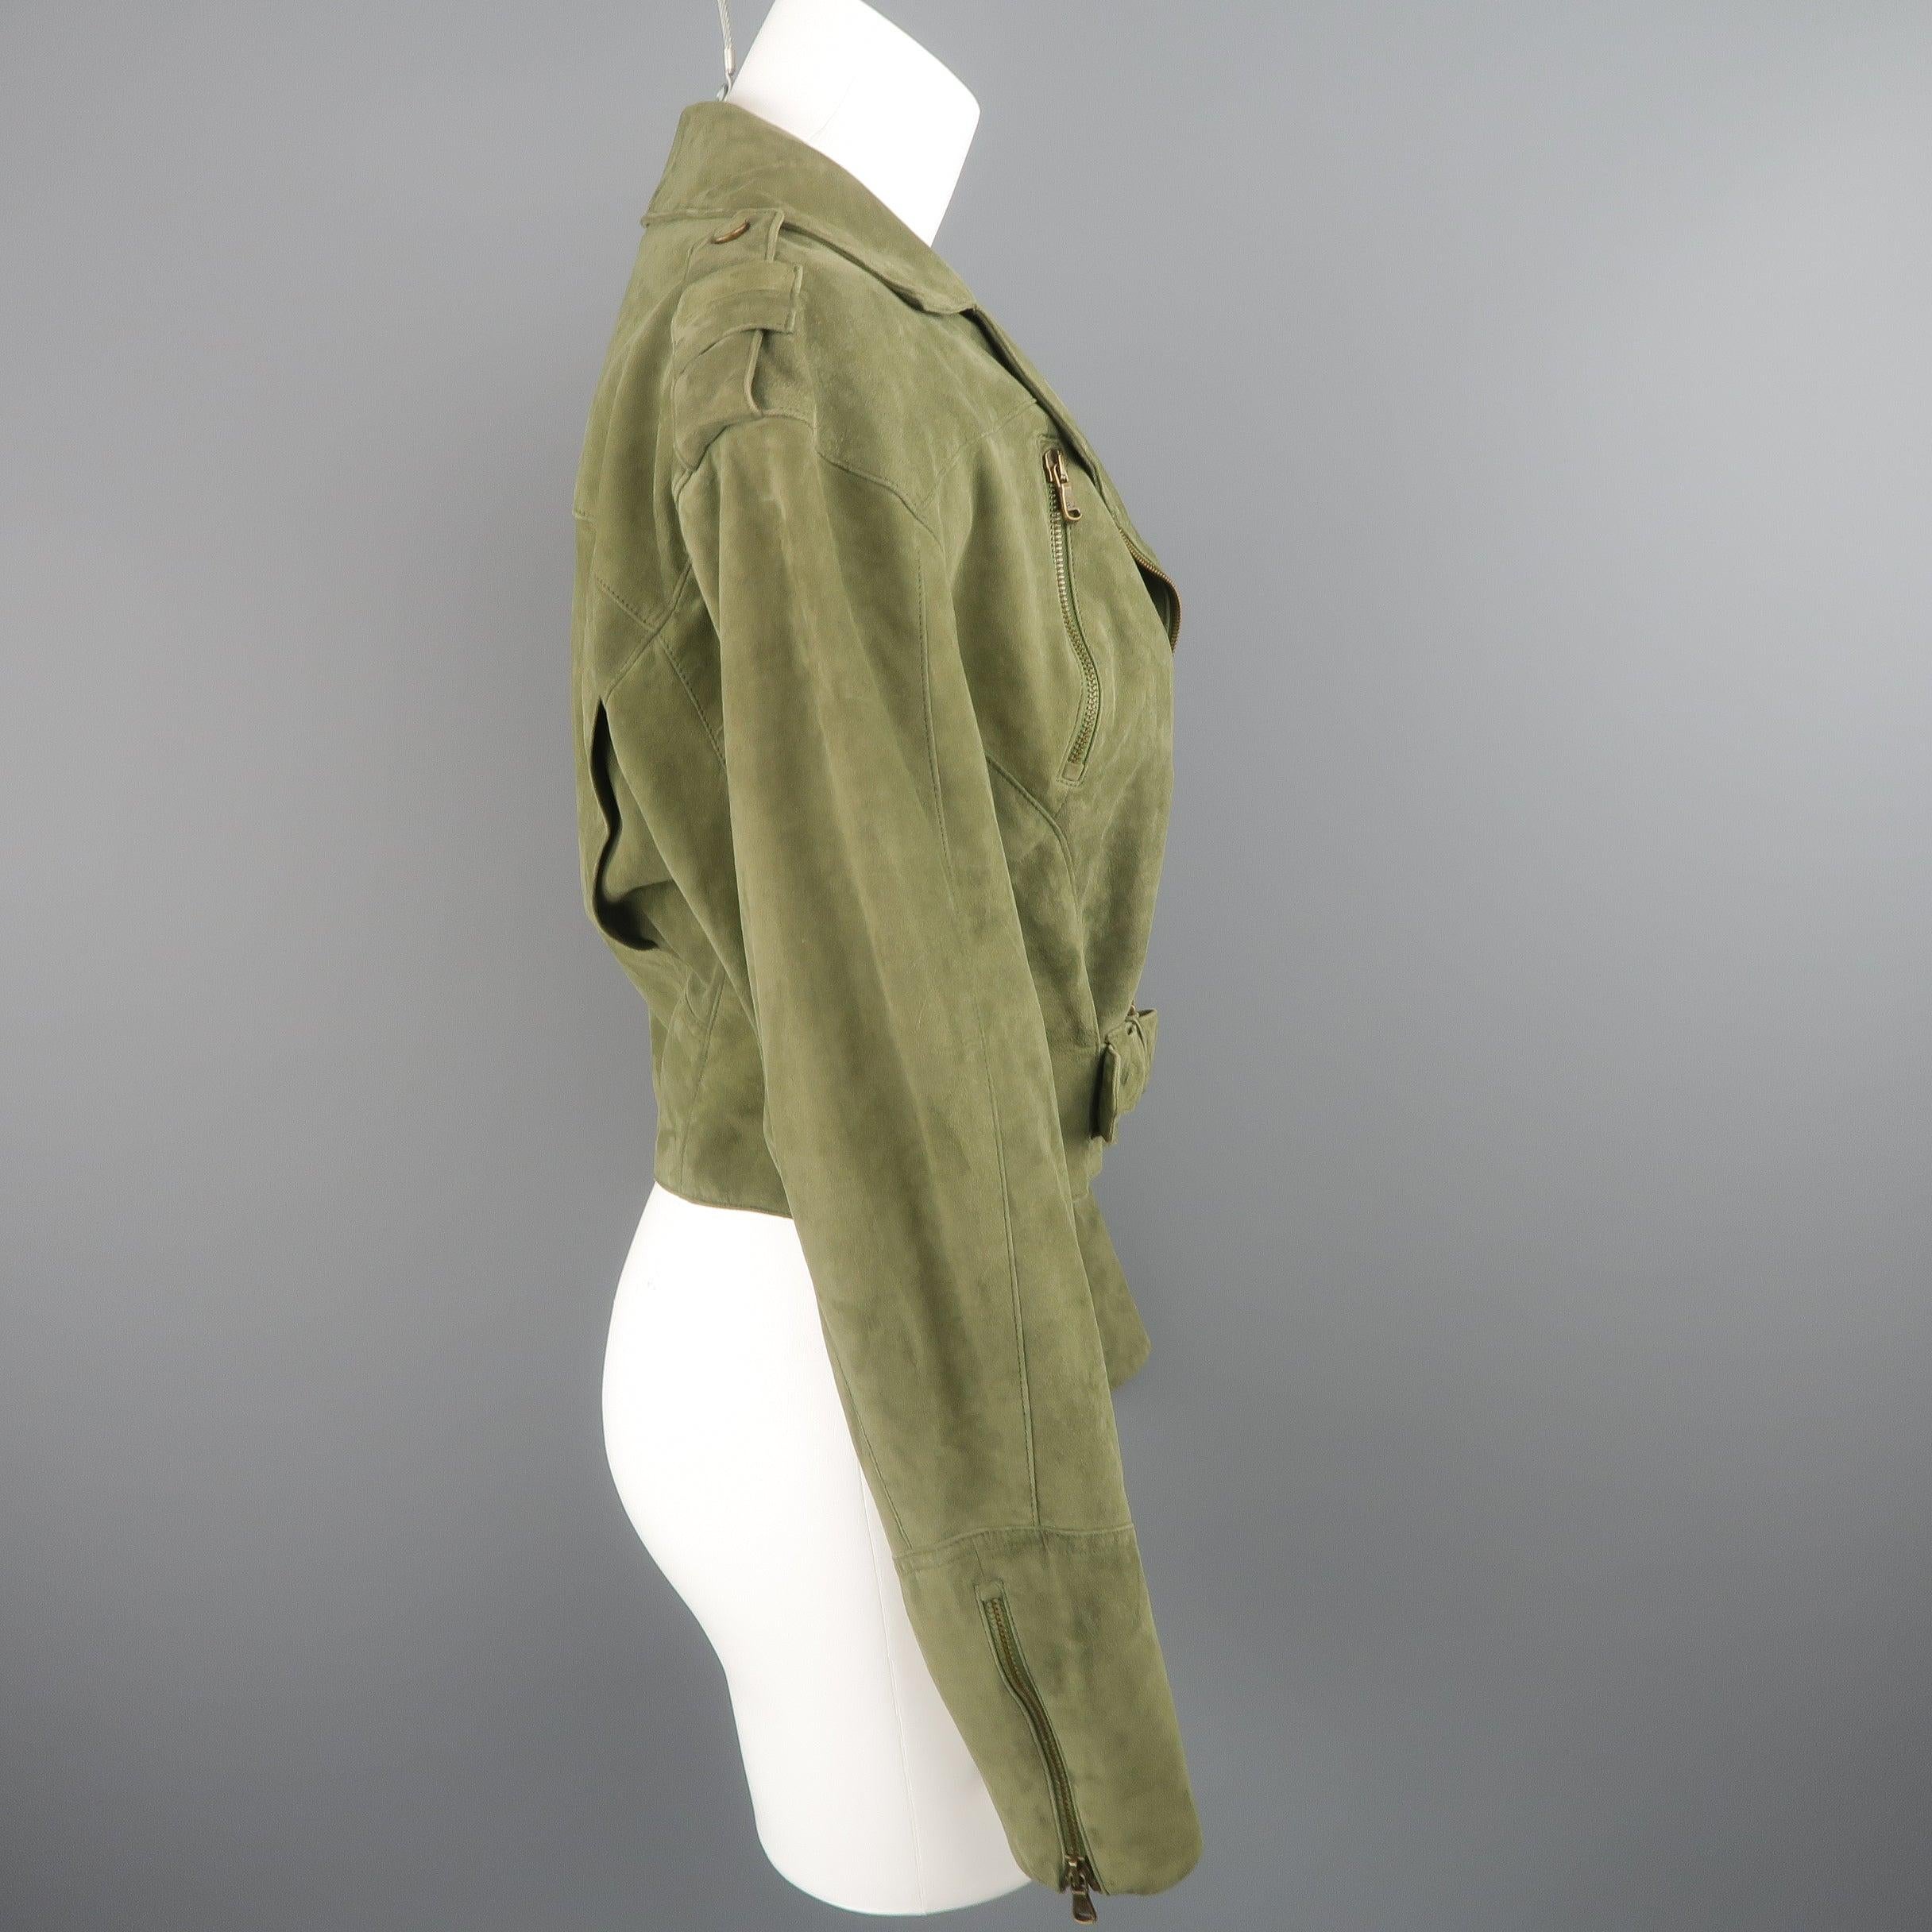 RALPH LAUREN Size 6 Olive Suede Cropped Lace Up Biker Jacket For Sale 1